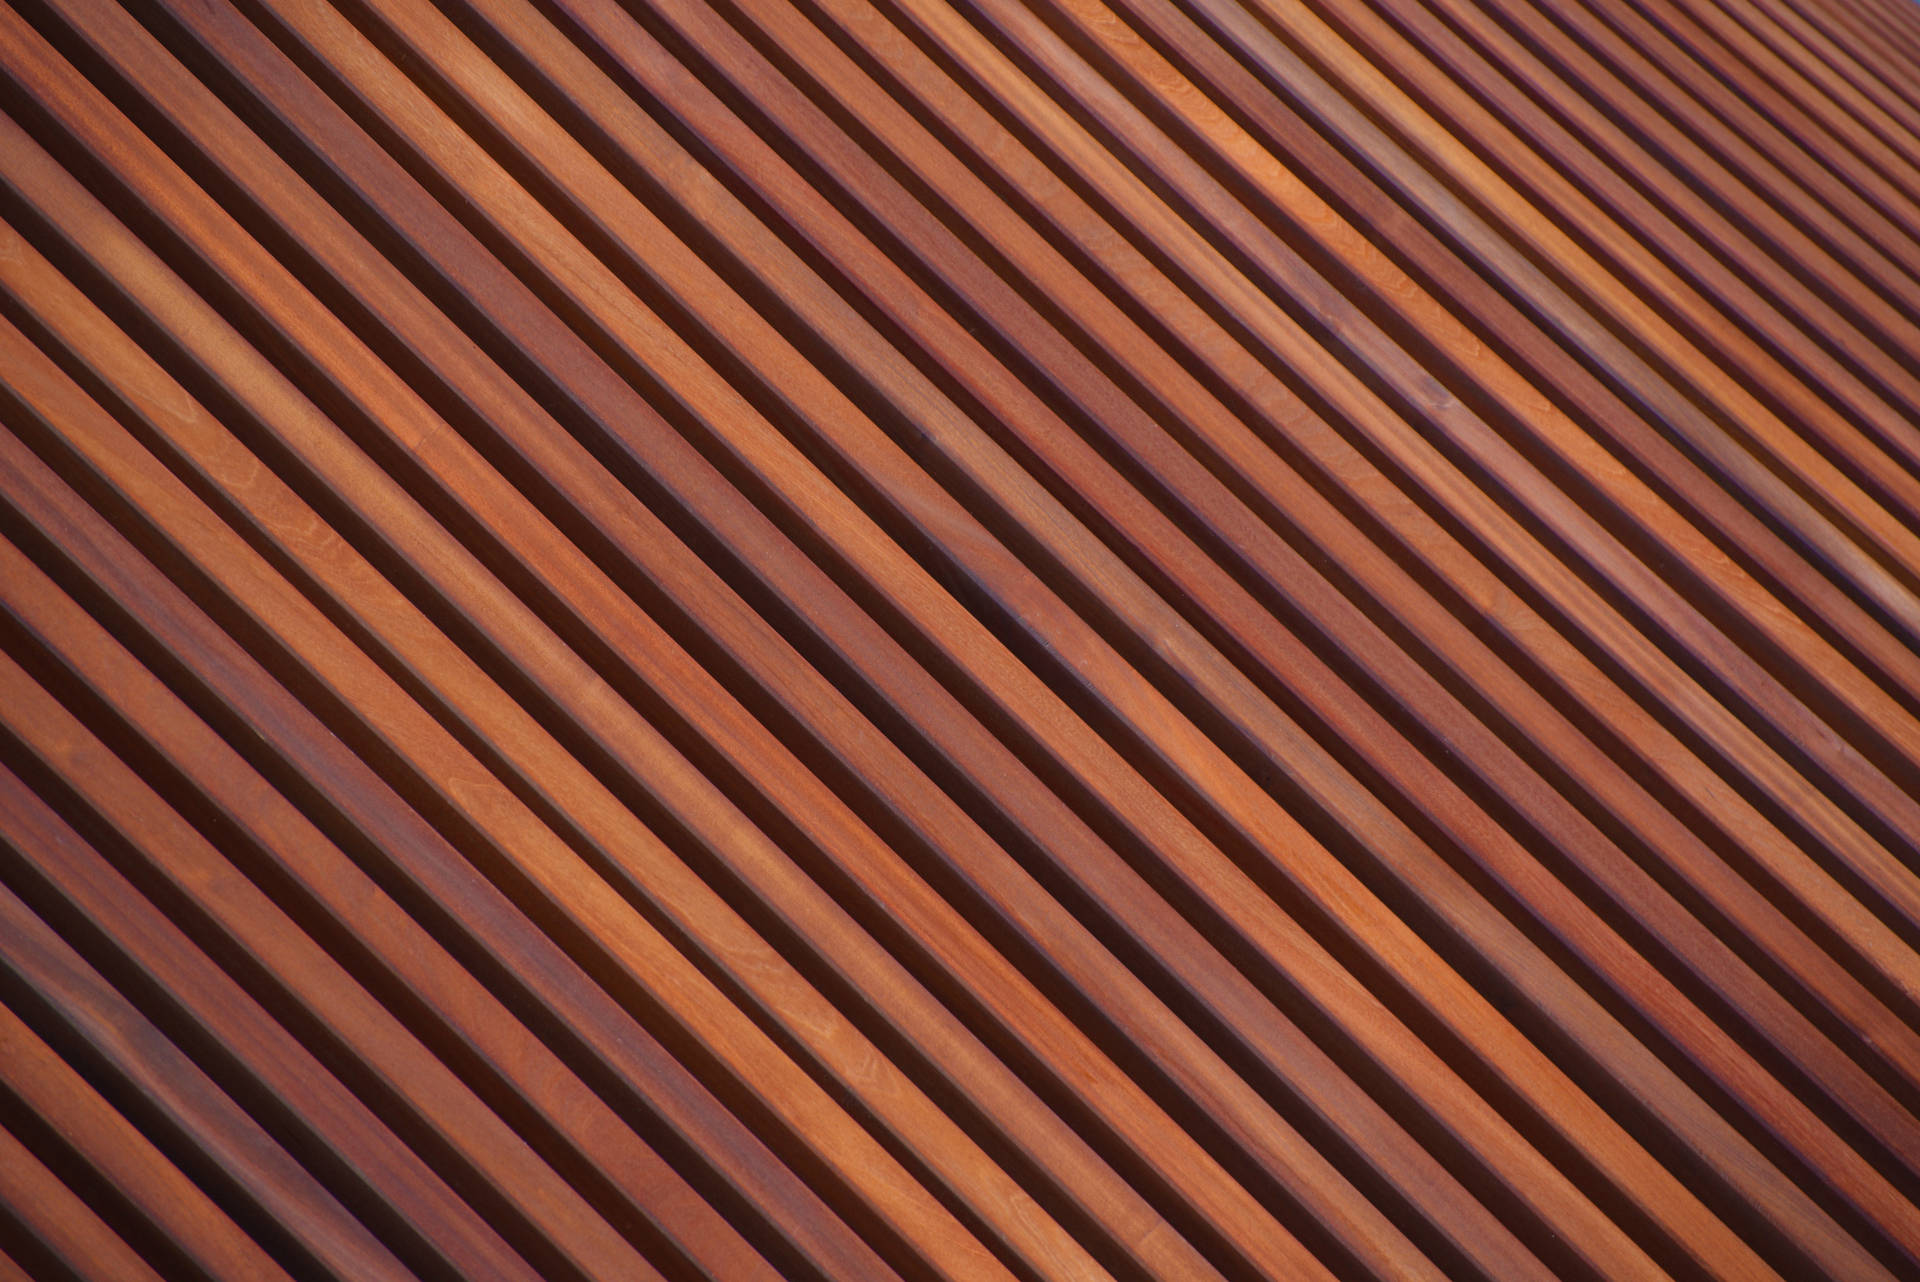 Timber Slats Wood Texture Background